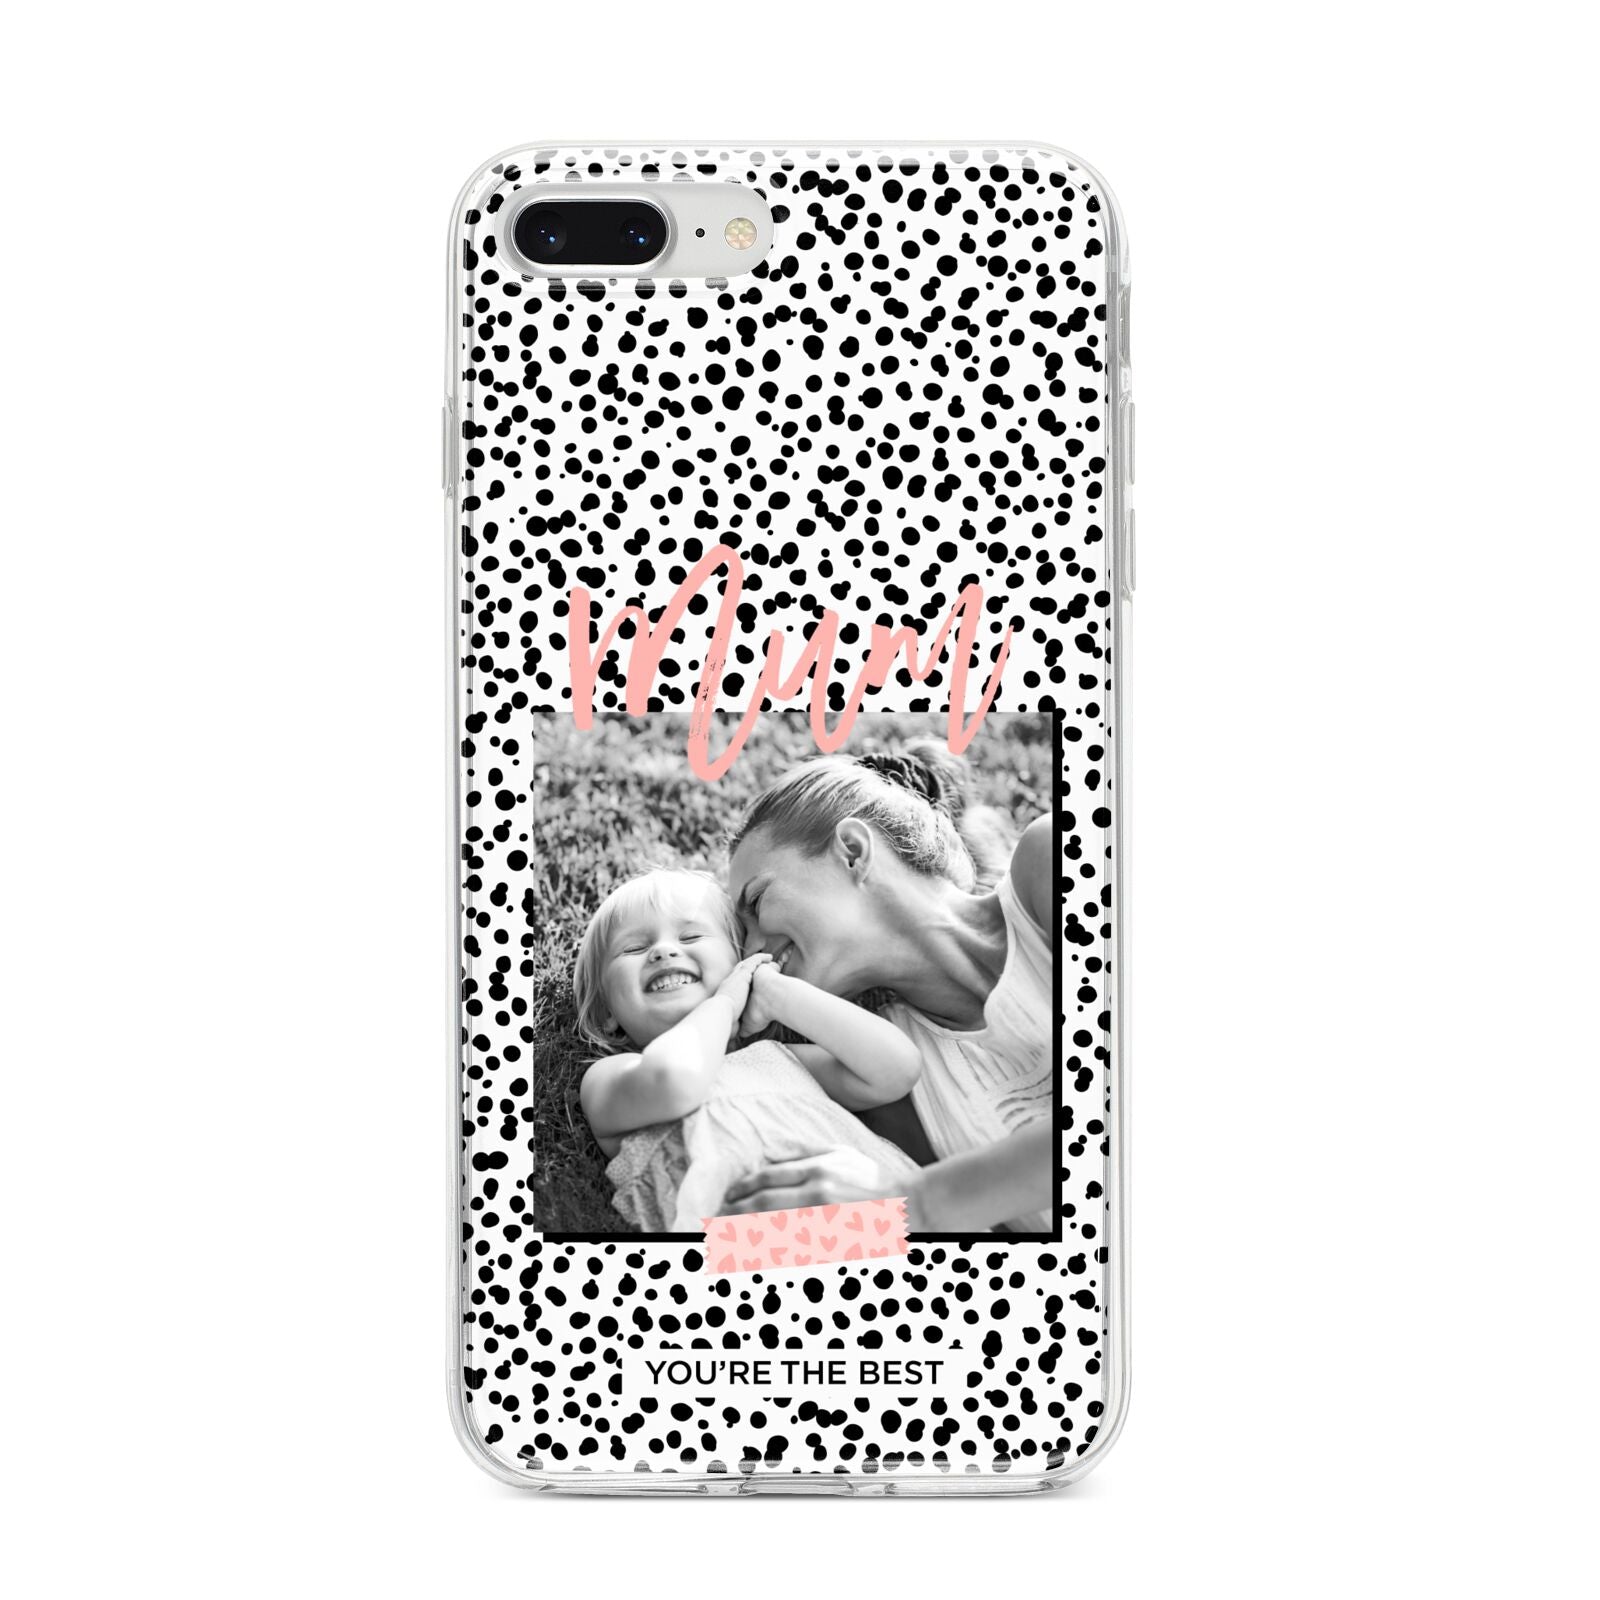 Polka Dot Mum iPhone 8 Plus Bumper Case on Silver iPhone